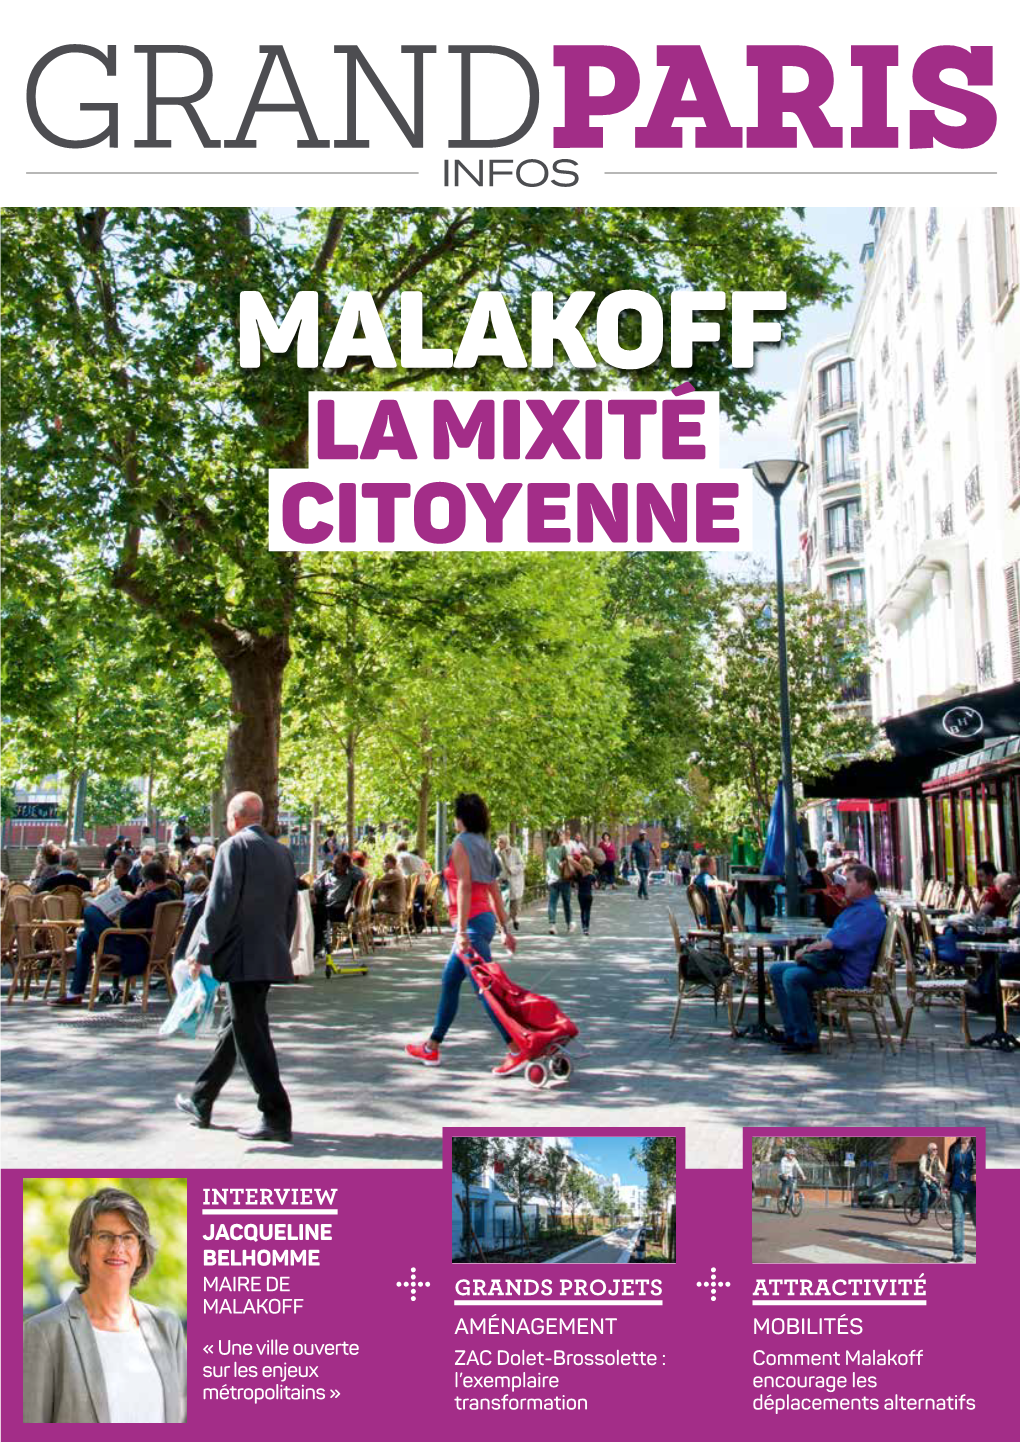 Grand Paris Infos • MALAKOFF